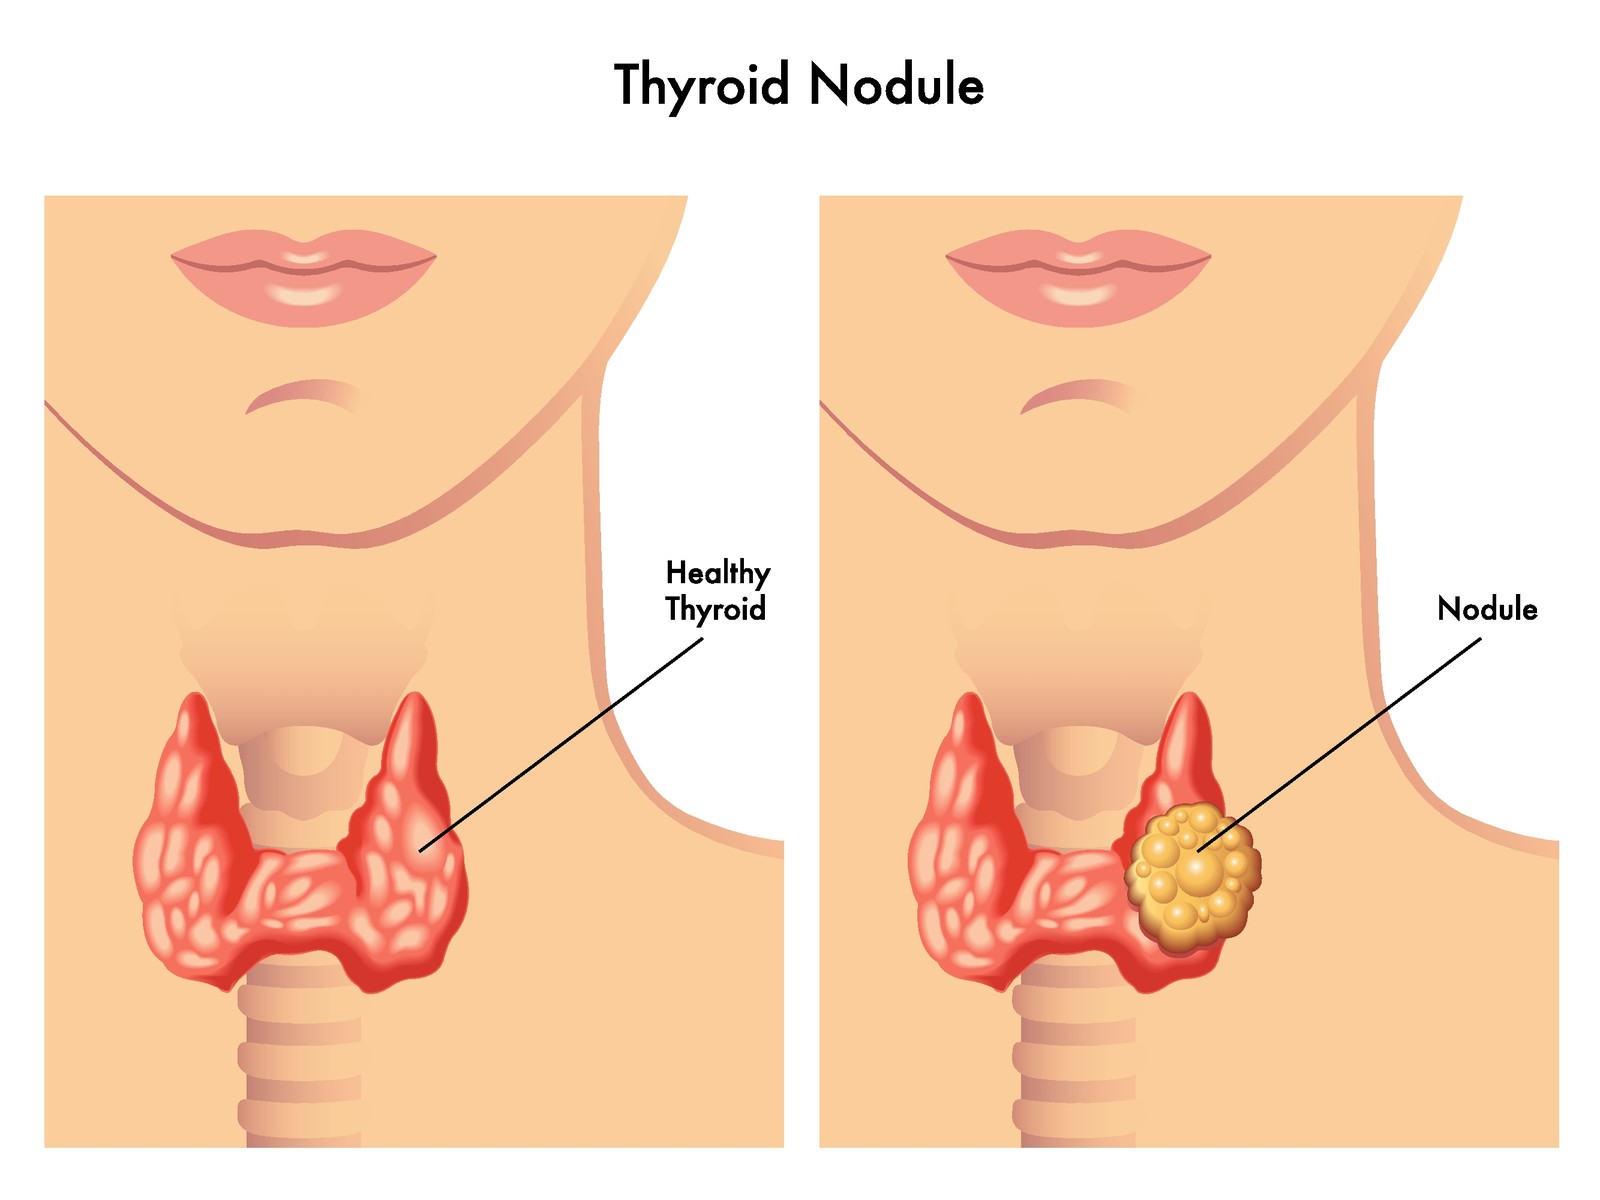 Thyroid nodule treatment